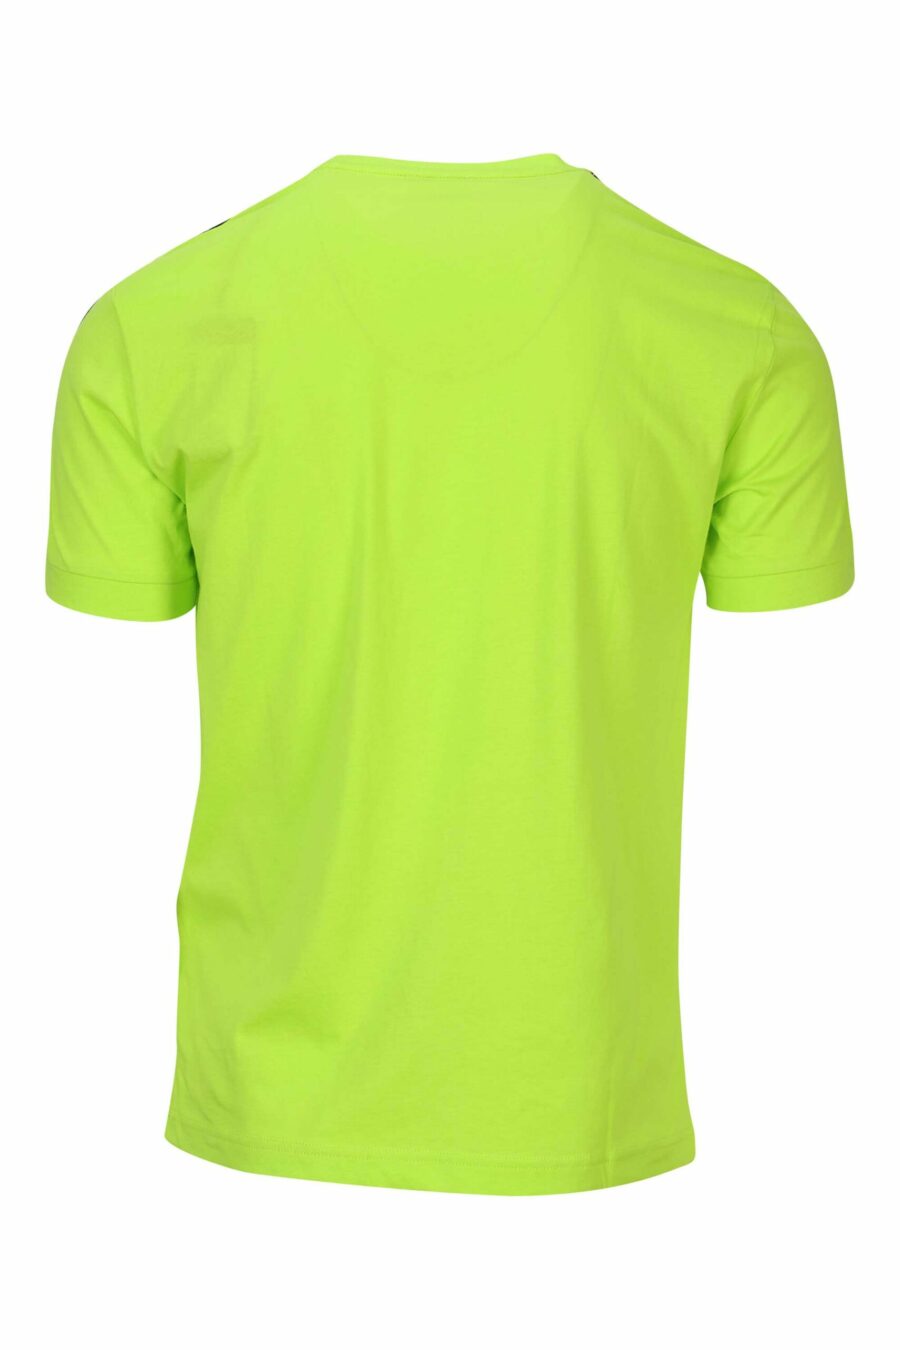 Camiseta verde lima con minilogo en cinta "lux identity" negro - 8058947490943 1 scaled